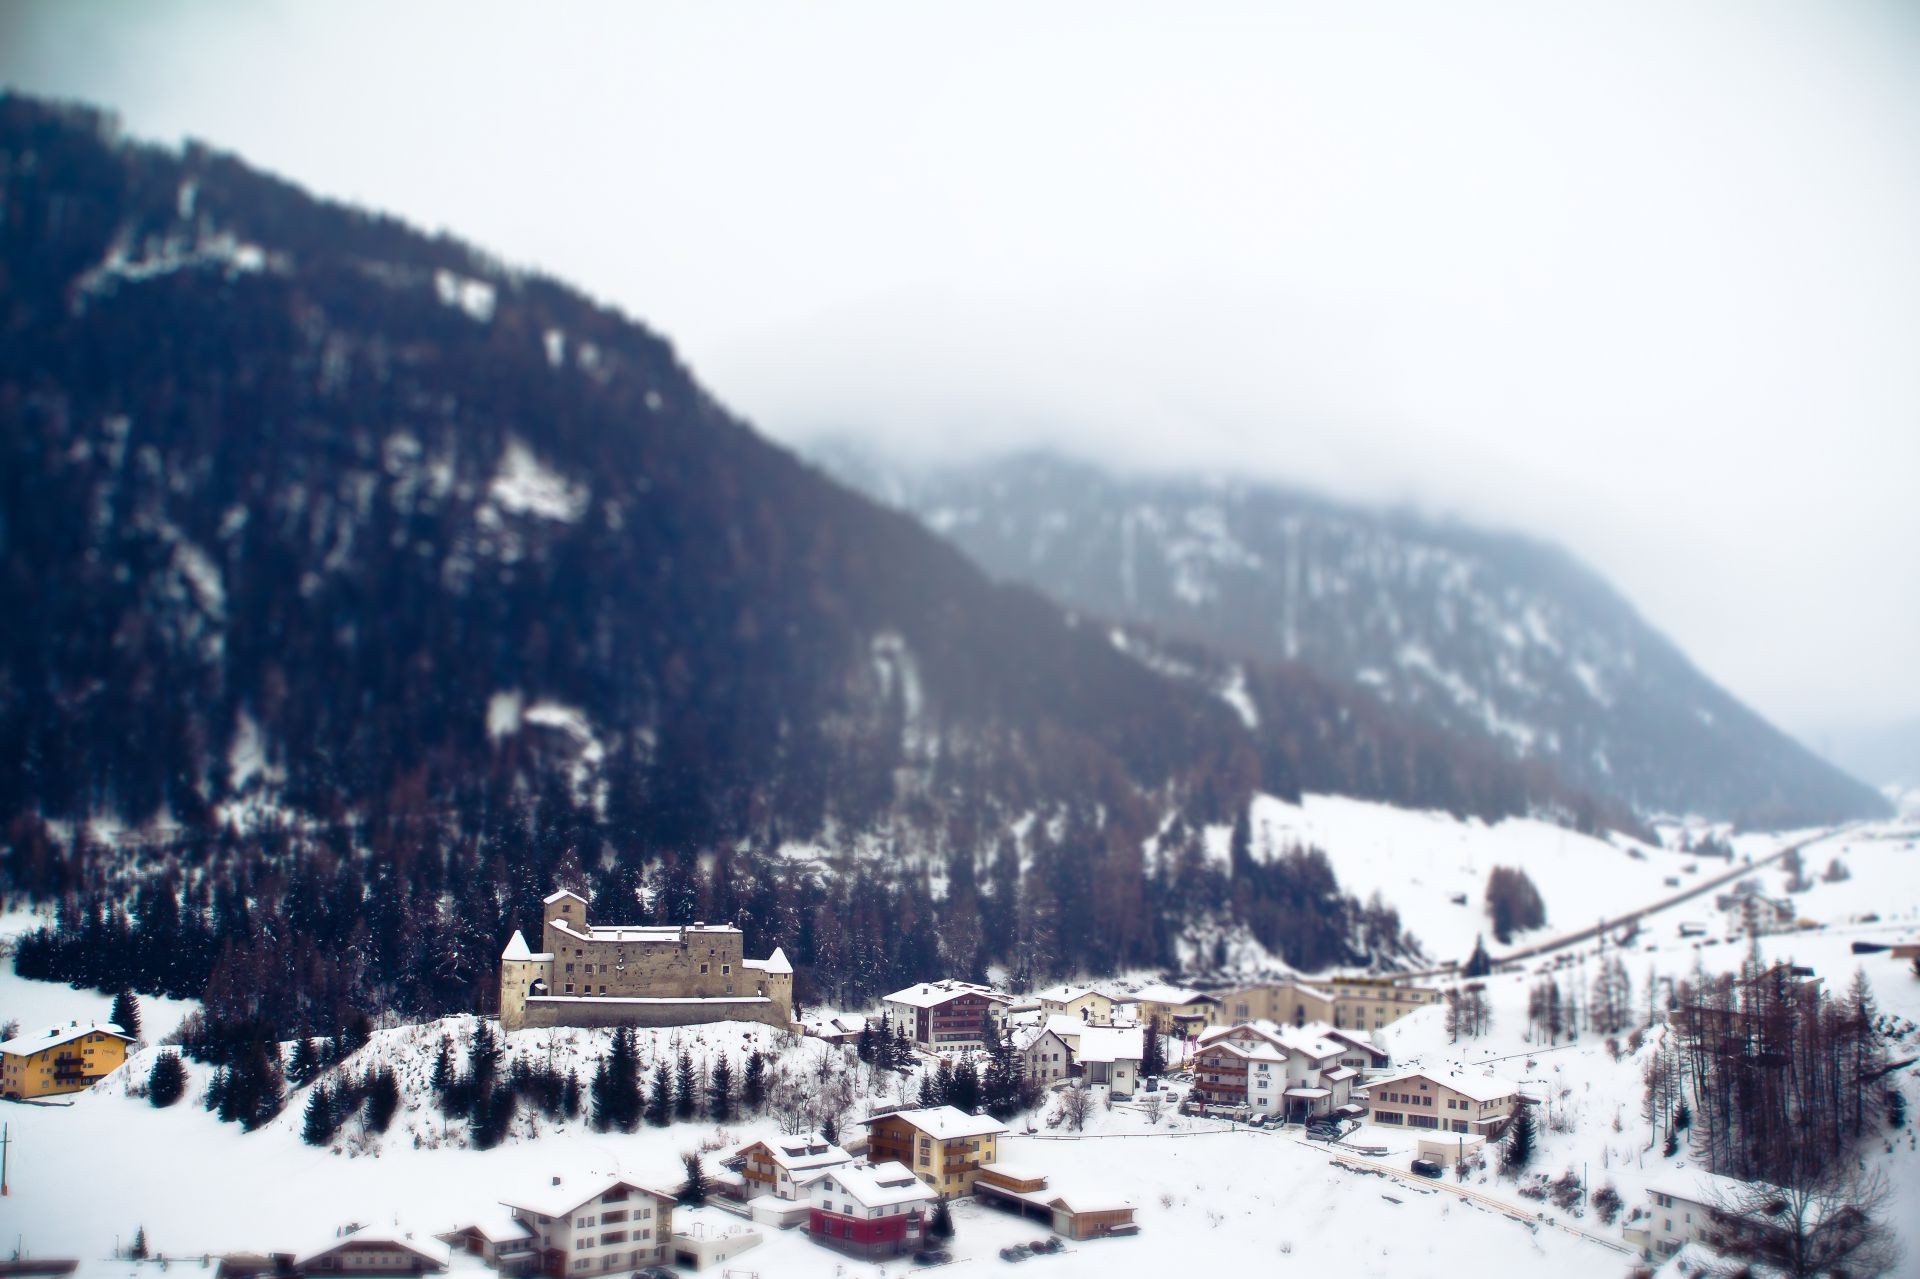 city snow winter mountain resort house travel cold hill landscape scenic tree ski resort outdoors frozen